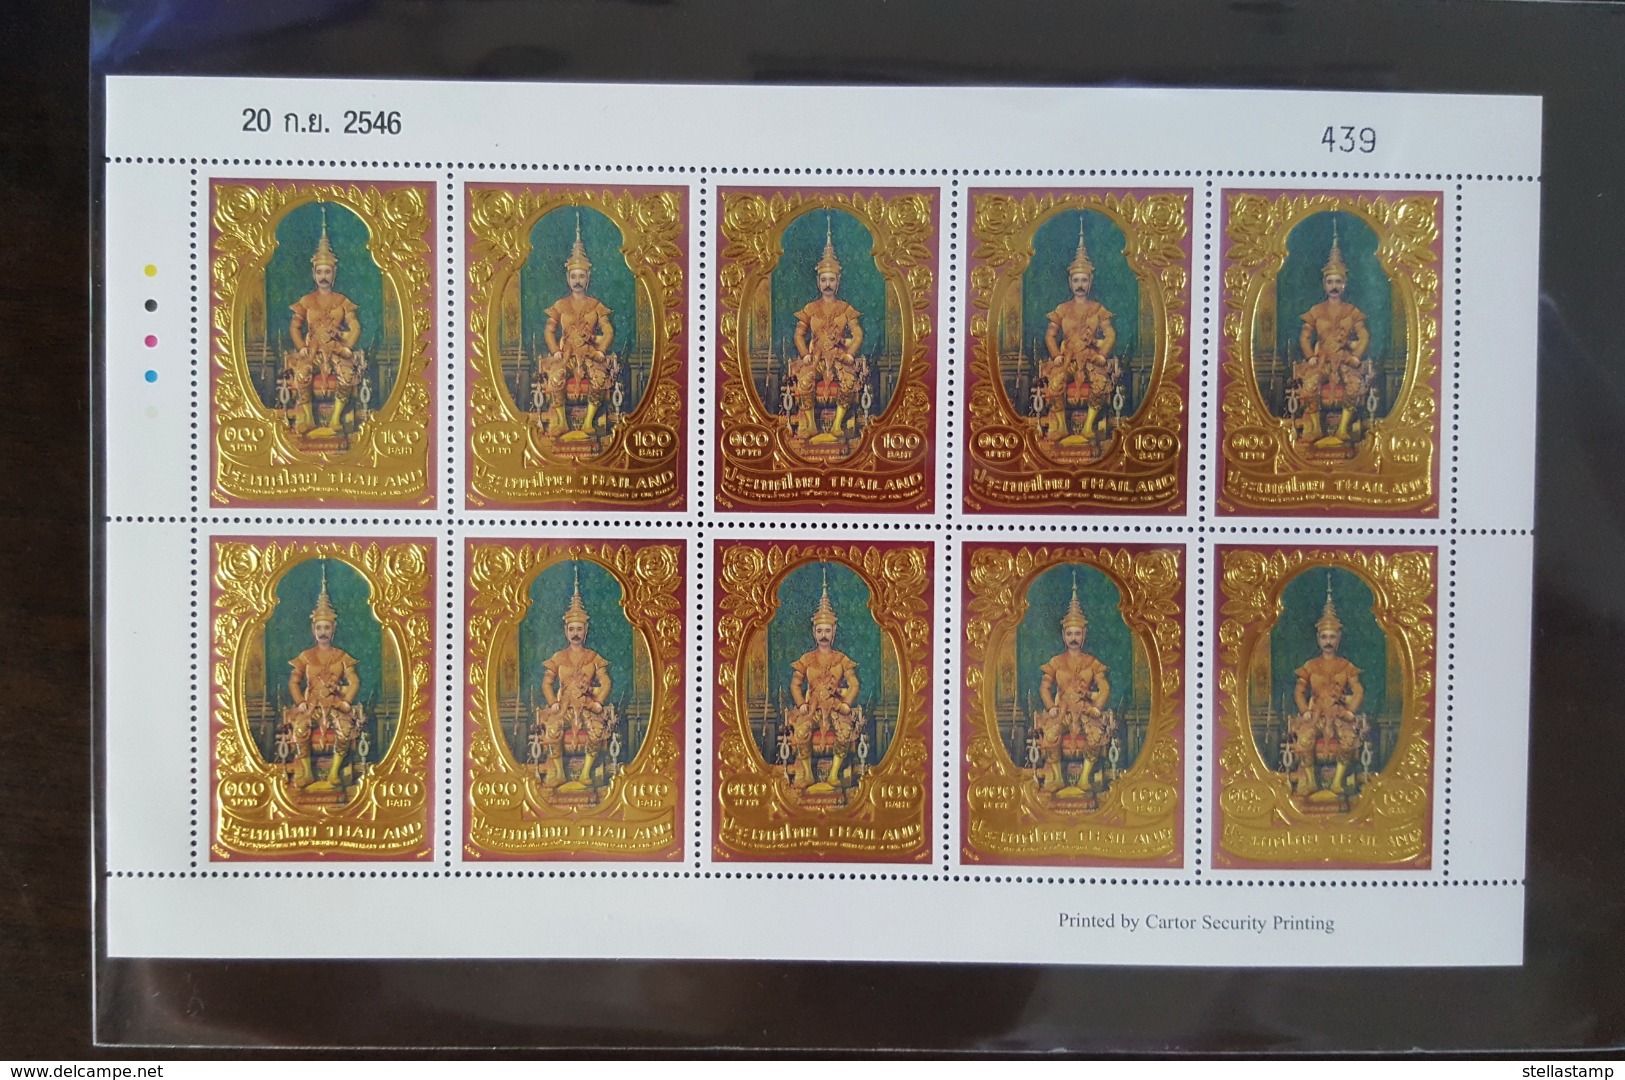 Thailand Stamp FS 2003 150th Birthday Ann King Rama V (B10) - Thailand